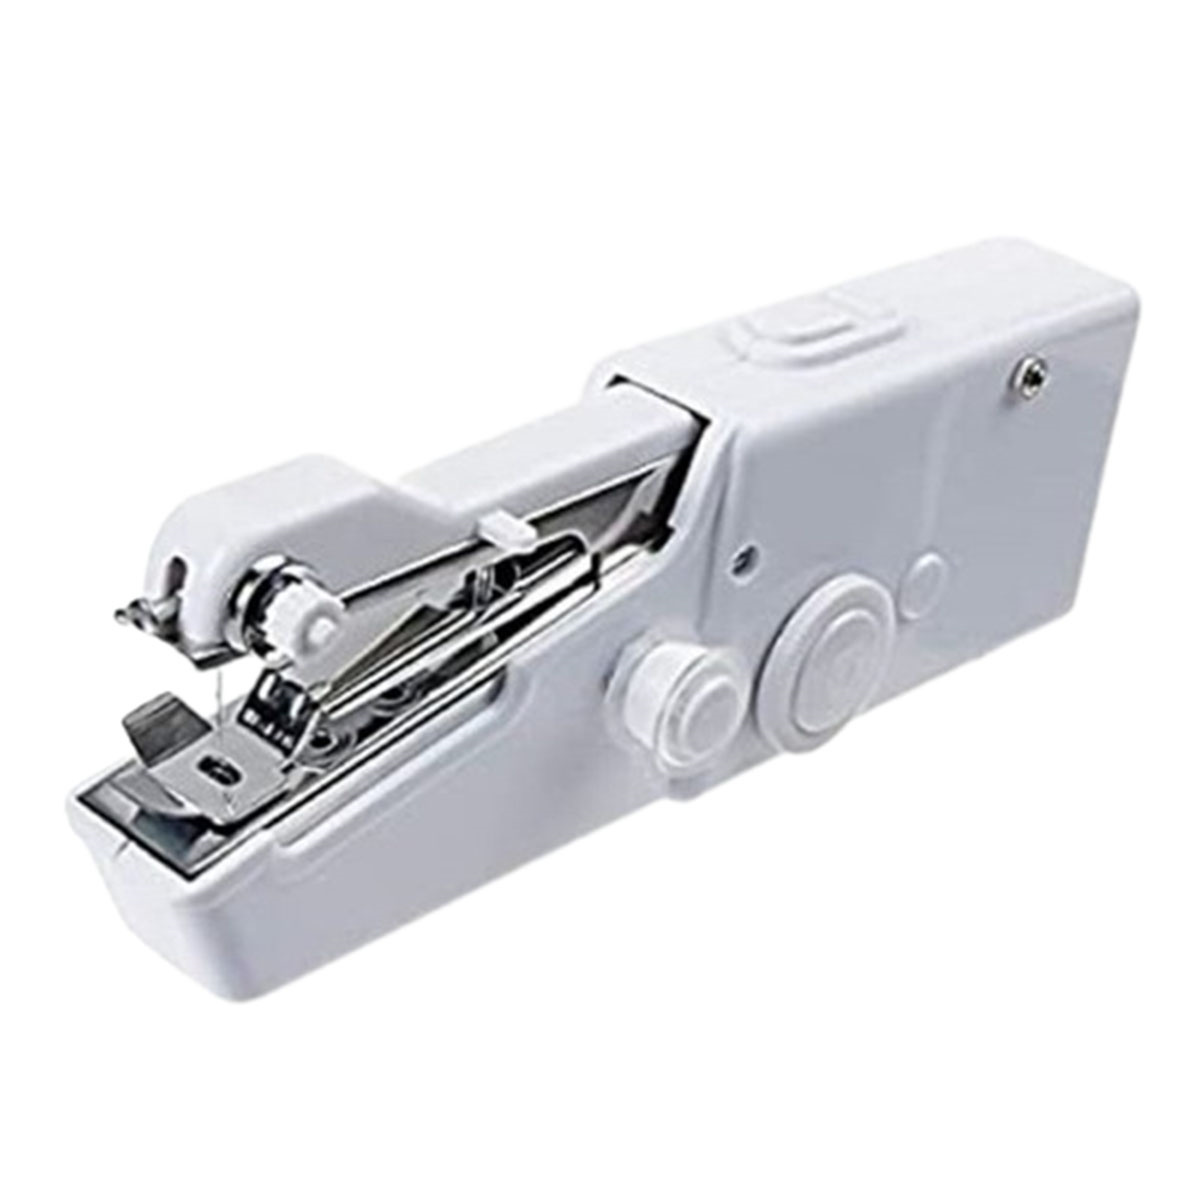 UWOT Mini-Elektro-Nähmaschinen-Set: Nähmaschinen langlebig, bedienen, Einfaden-Nähen,Weiß einfach zu